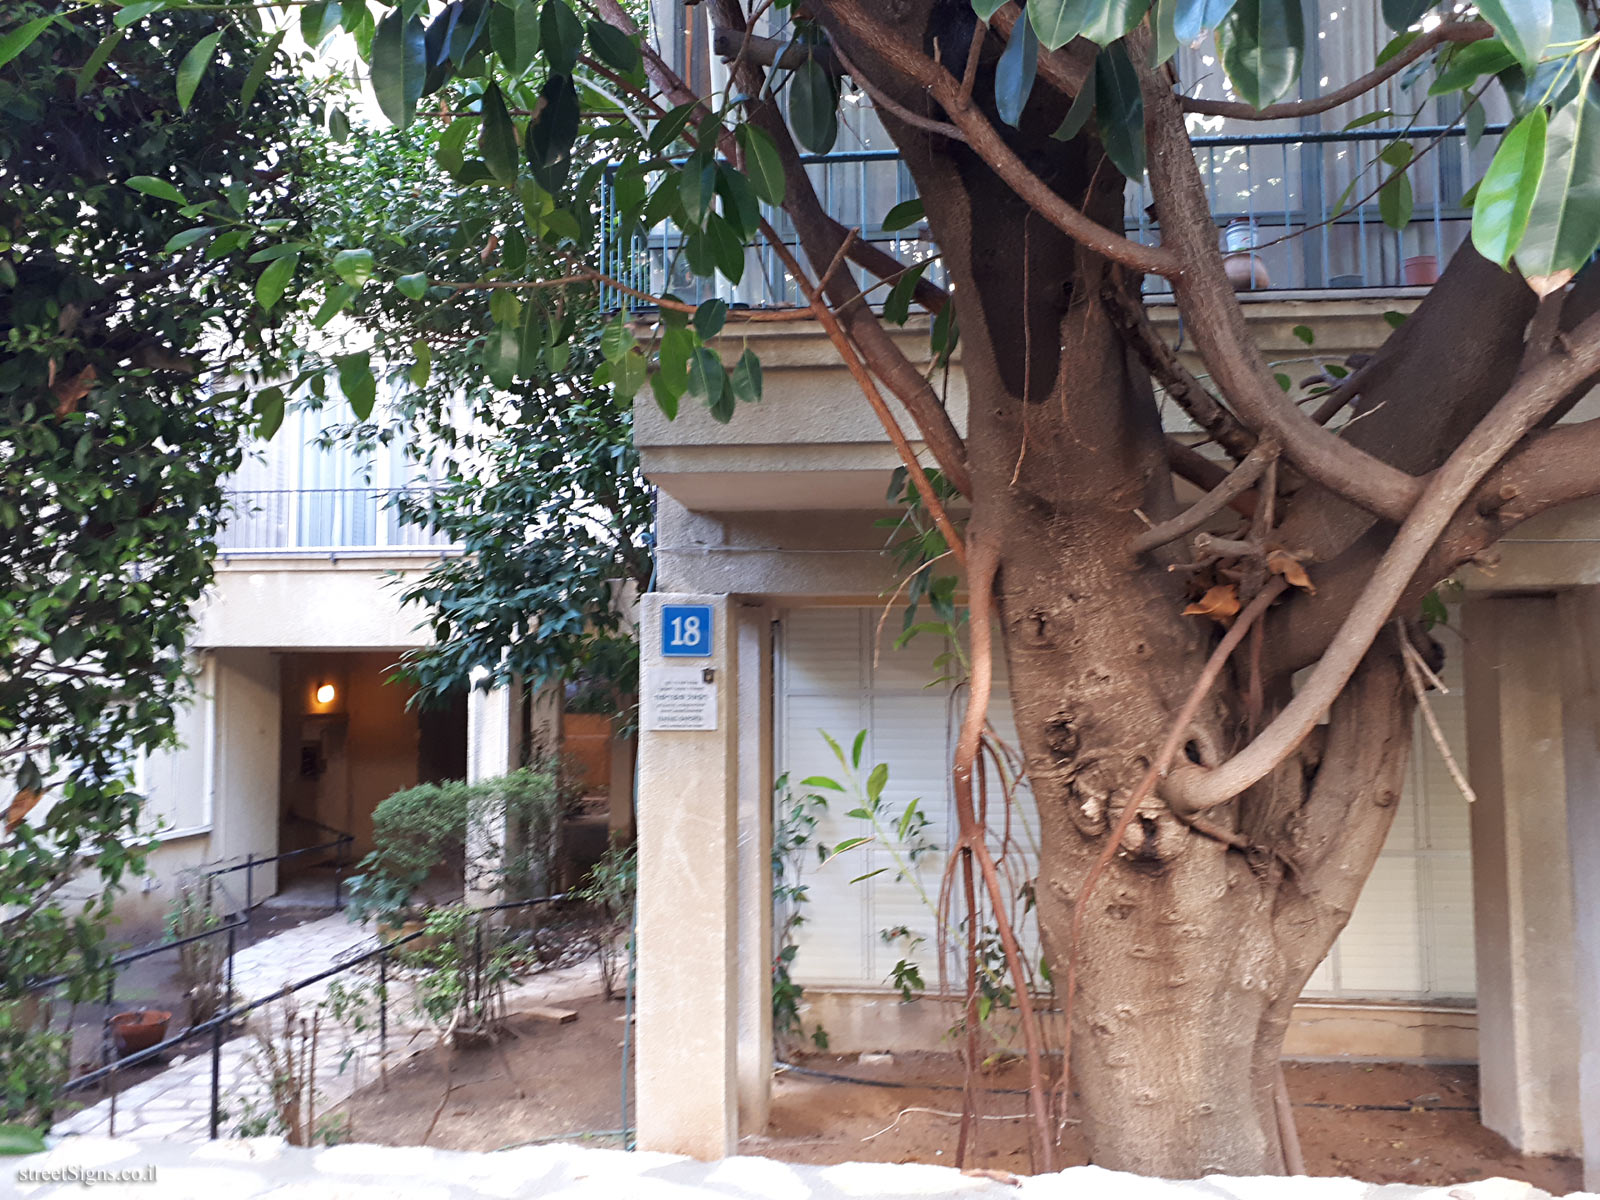 The house of Rafael Saporta - Alexander Yannai St 18, Tel Aviv-Yafo, Israel